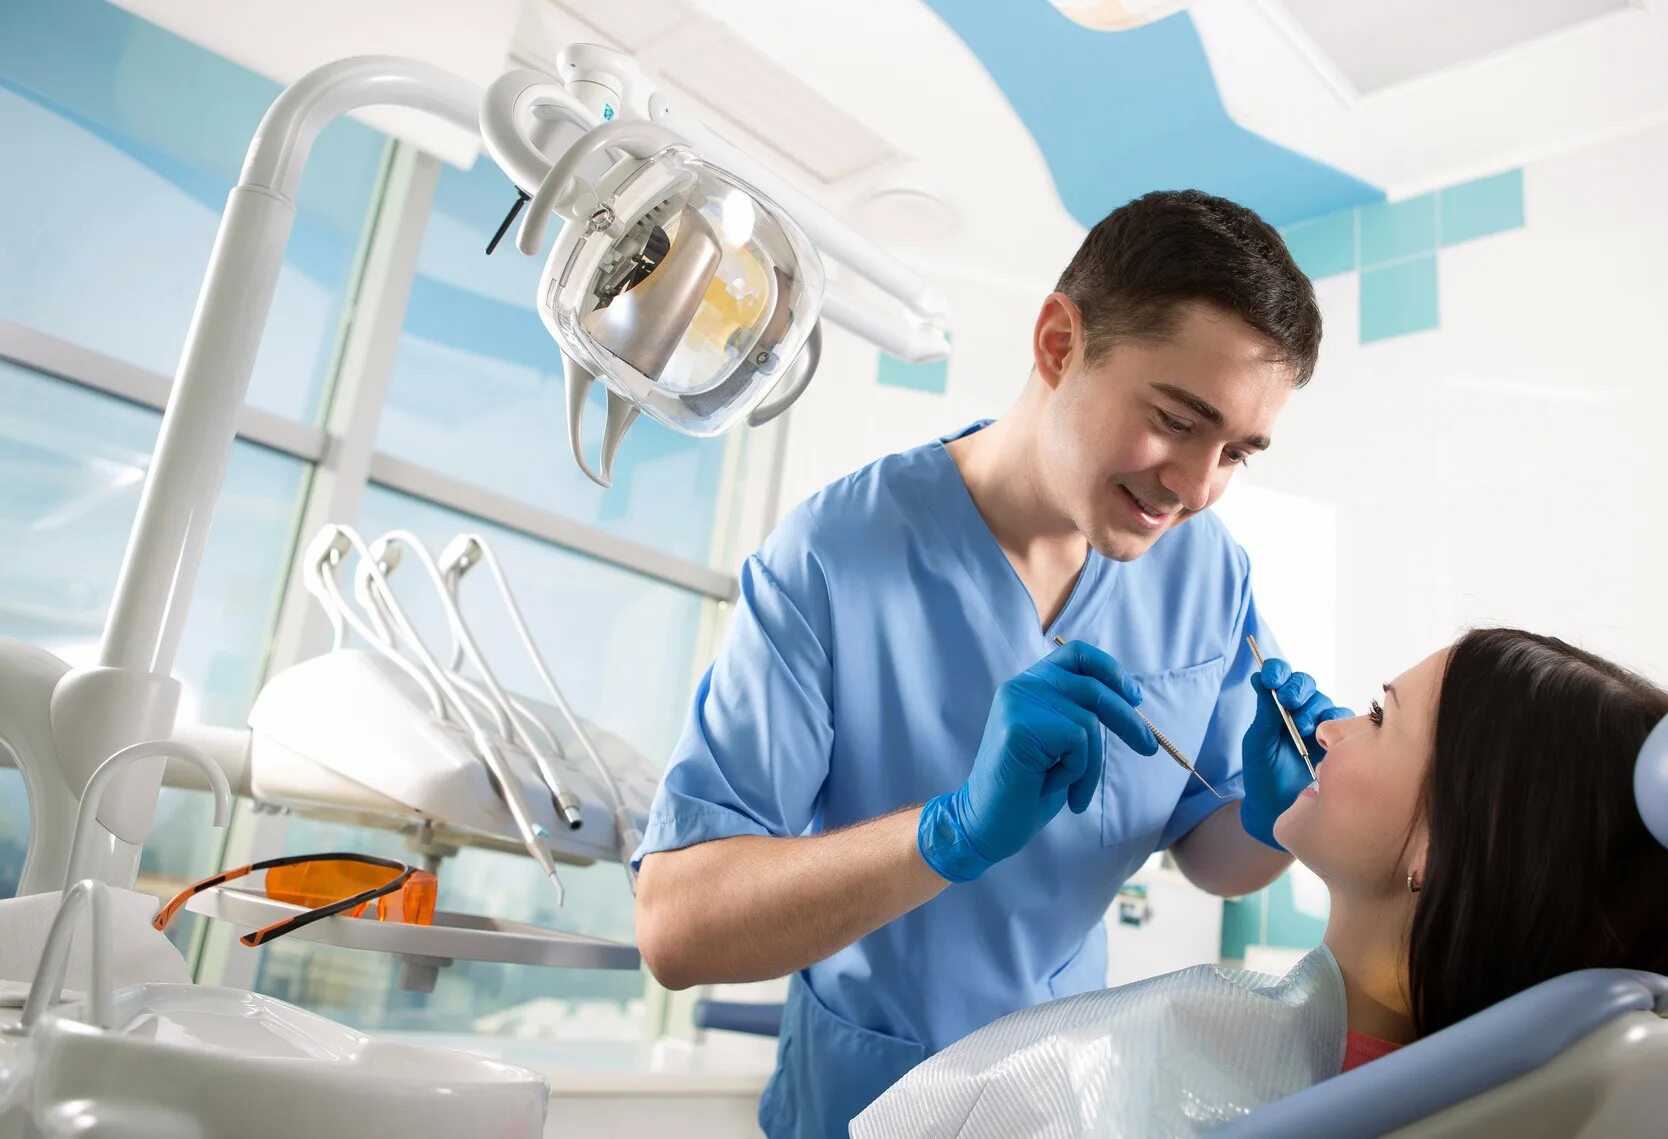 Авито стоматолог. Сайт стоматологии. Стоматолог. Стоматология фотосессия. Услуги стоматолога.